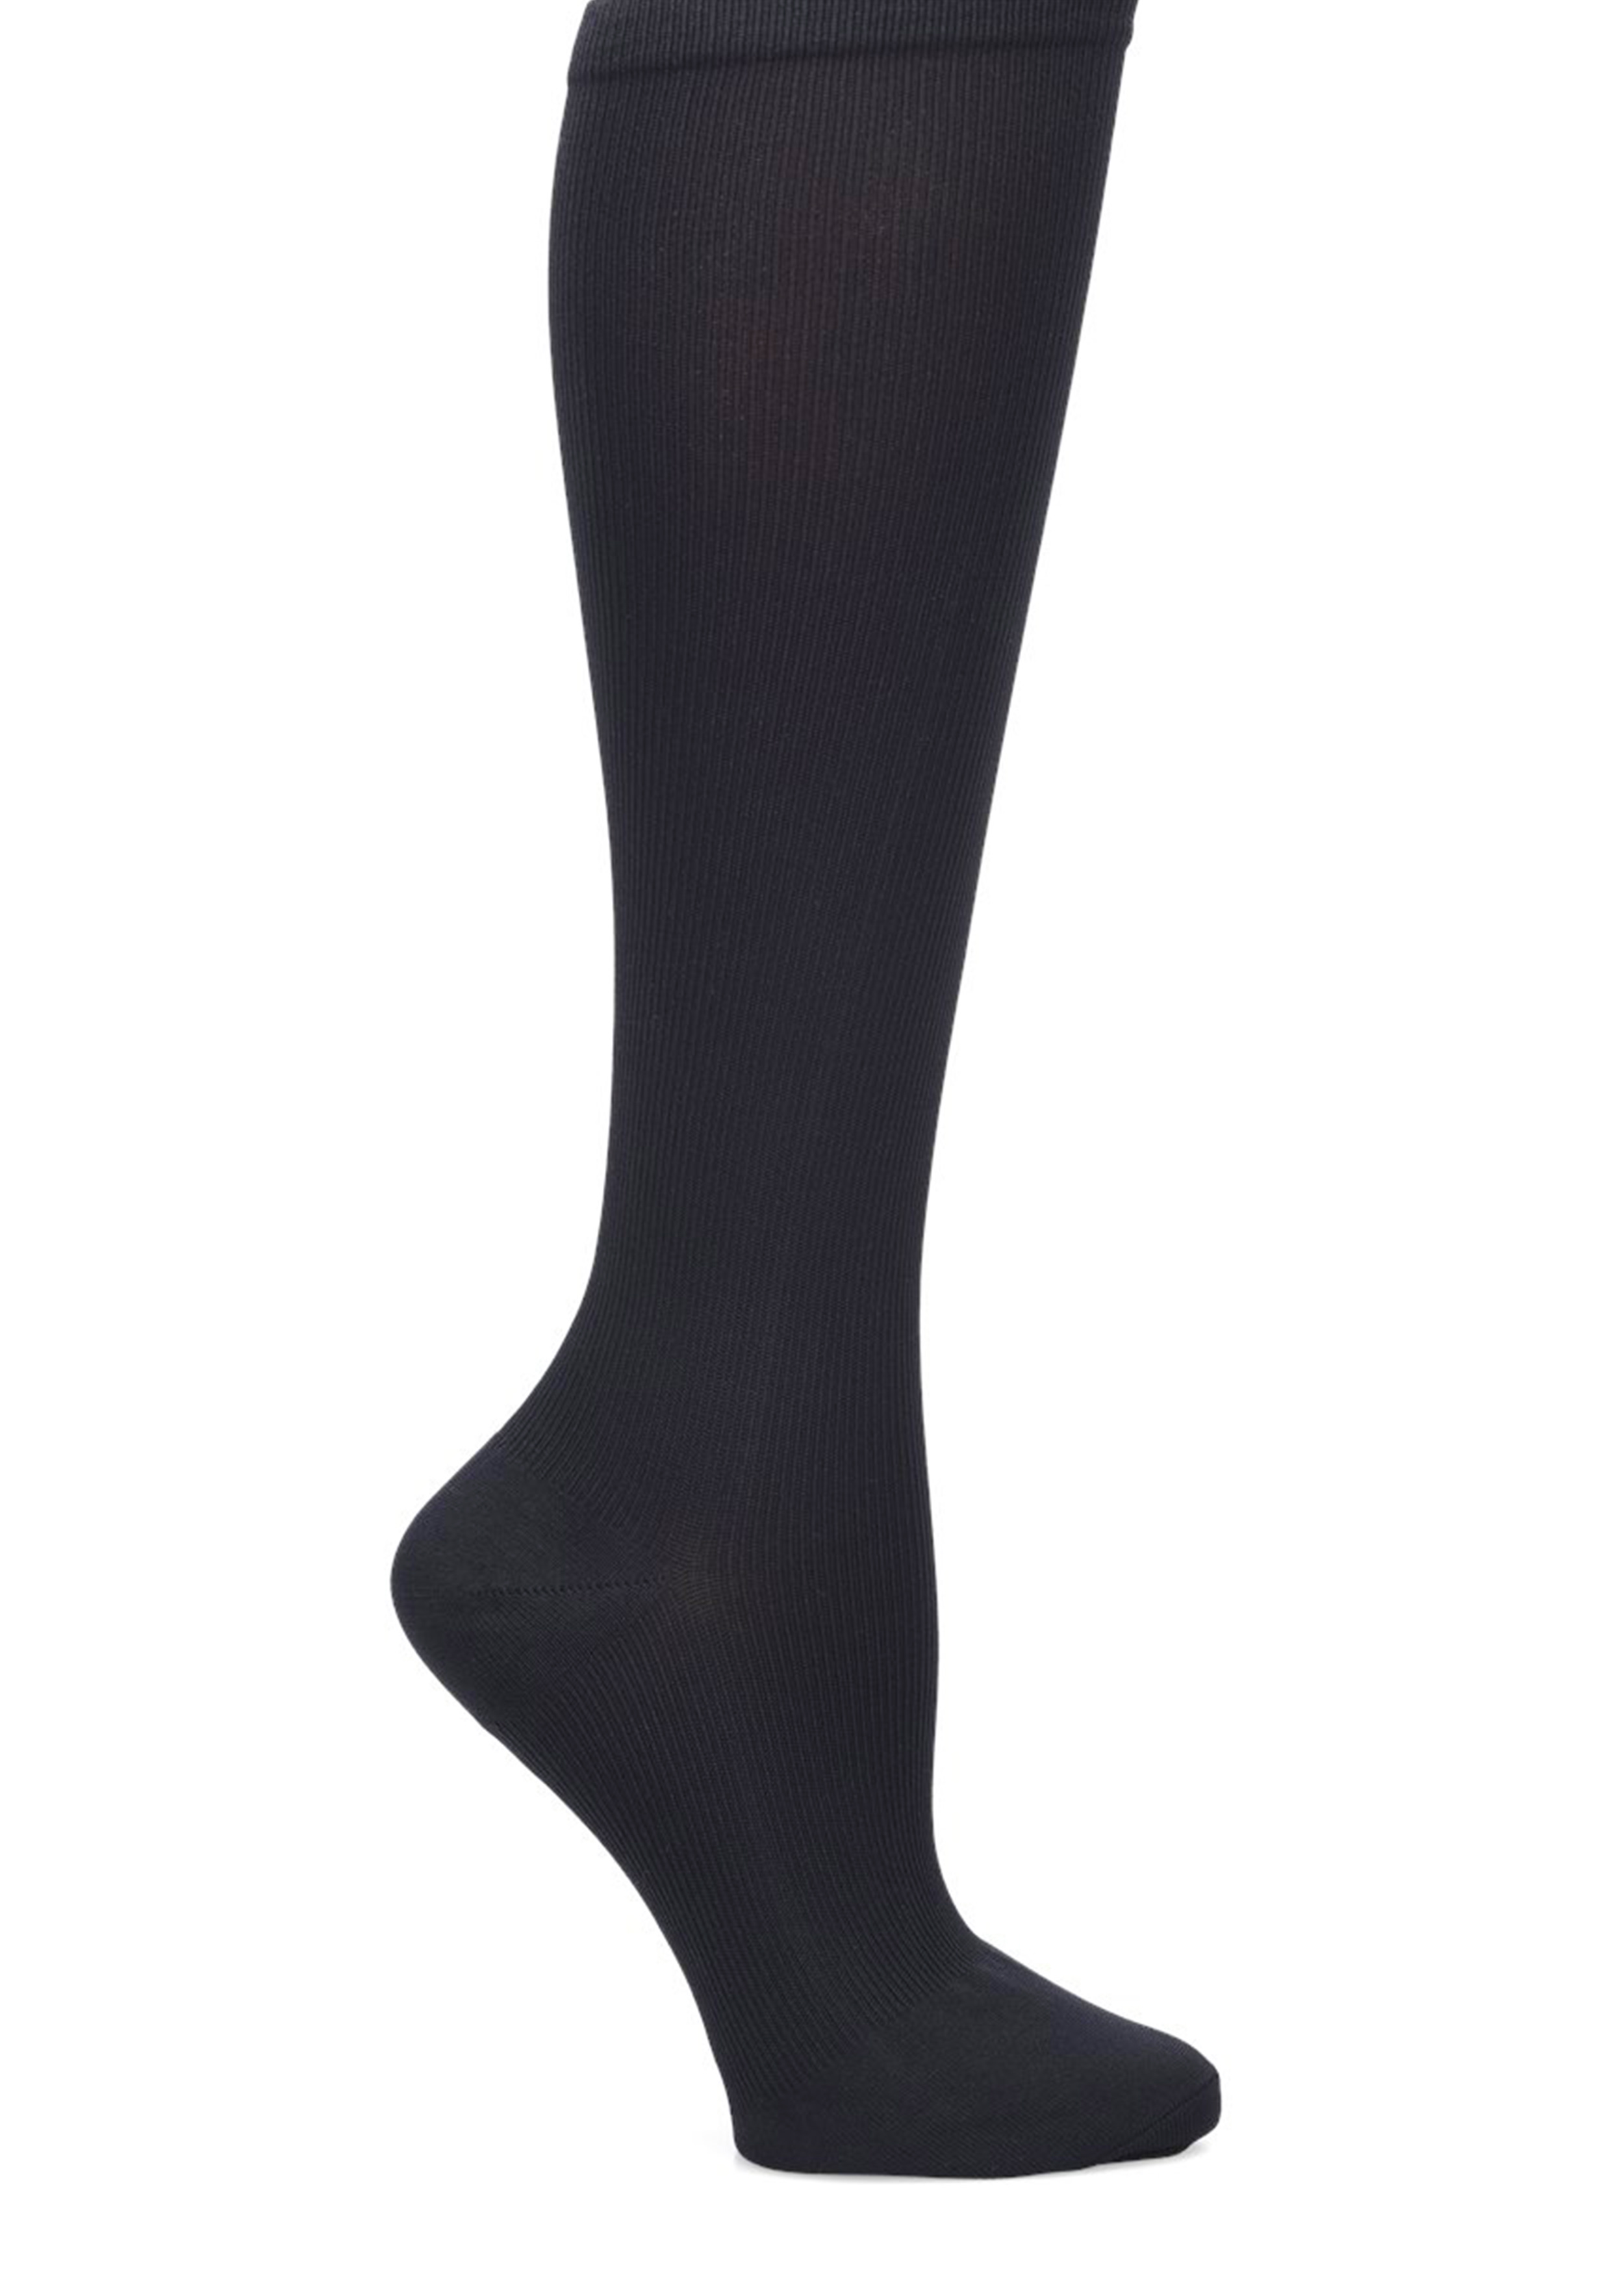 ladies lace black pop socks knee highstrouser socks one size  TINA  JAYNE BOUTIQUE